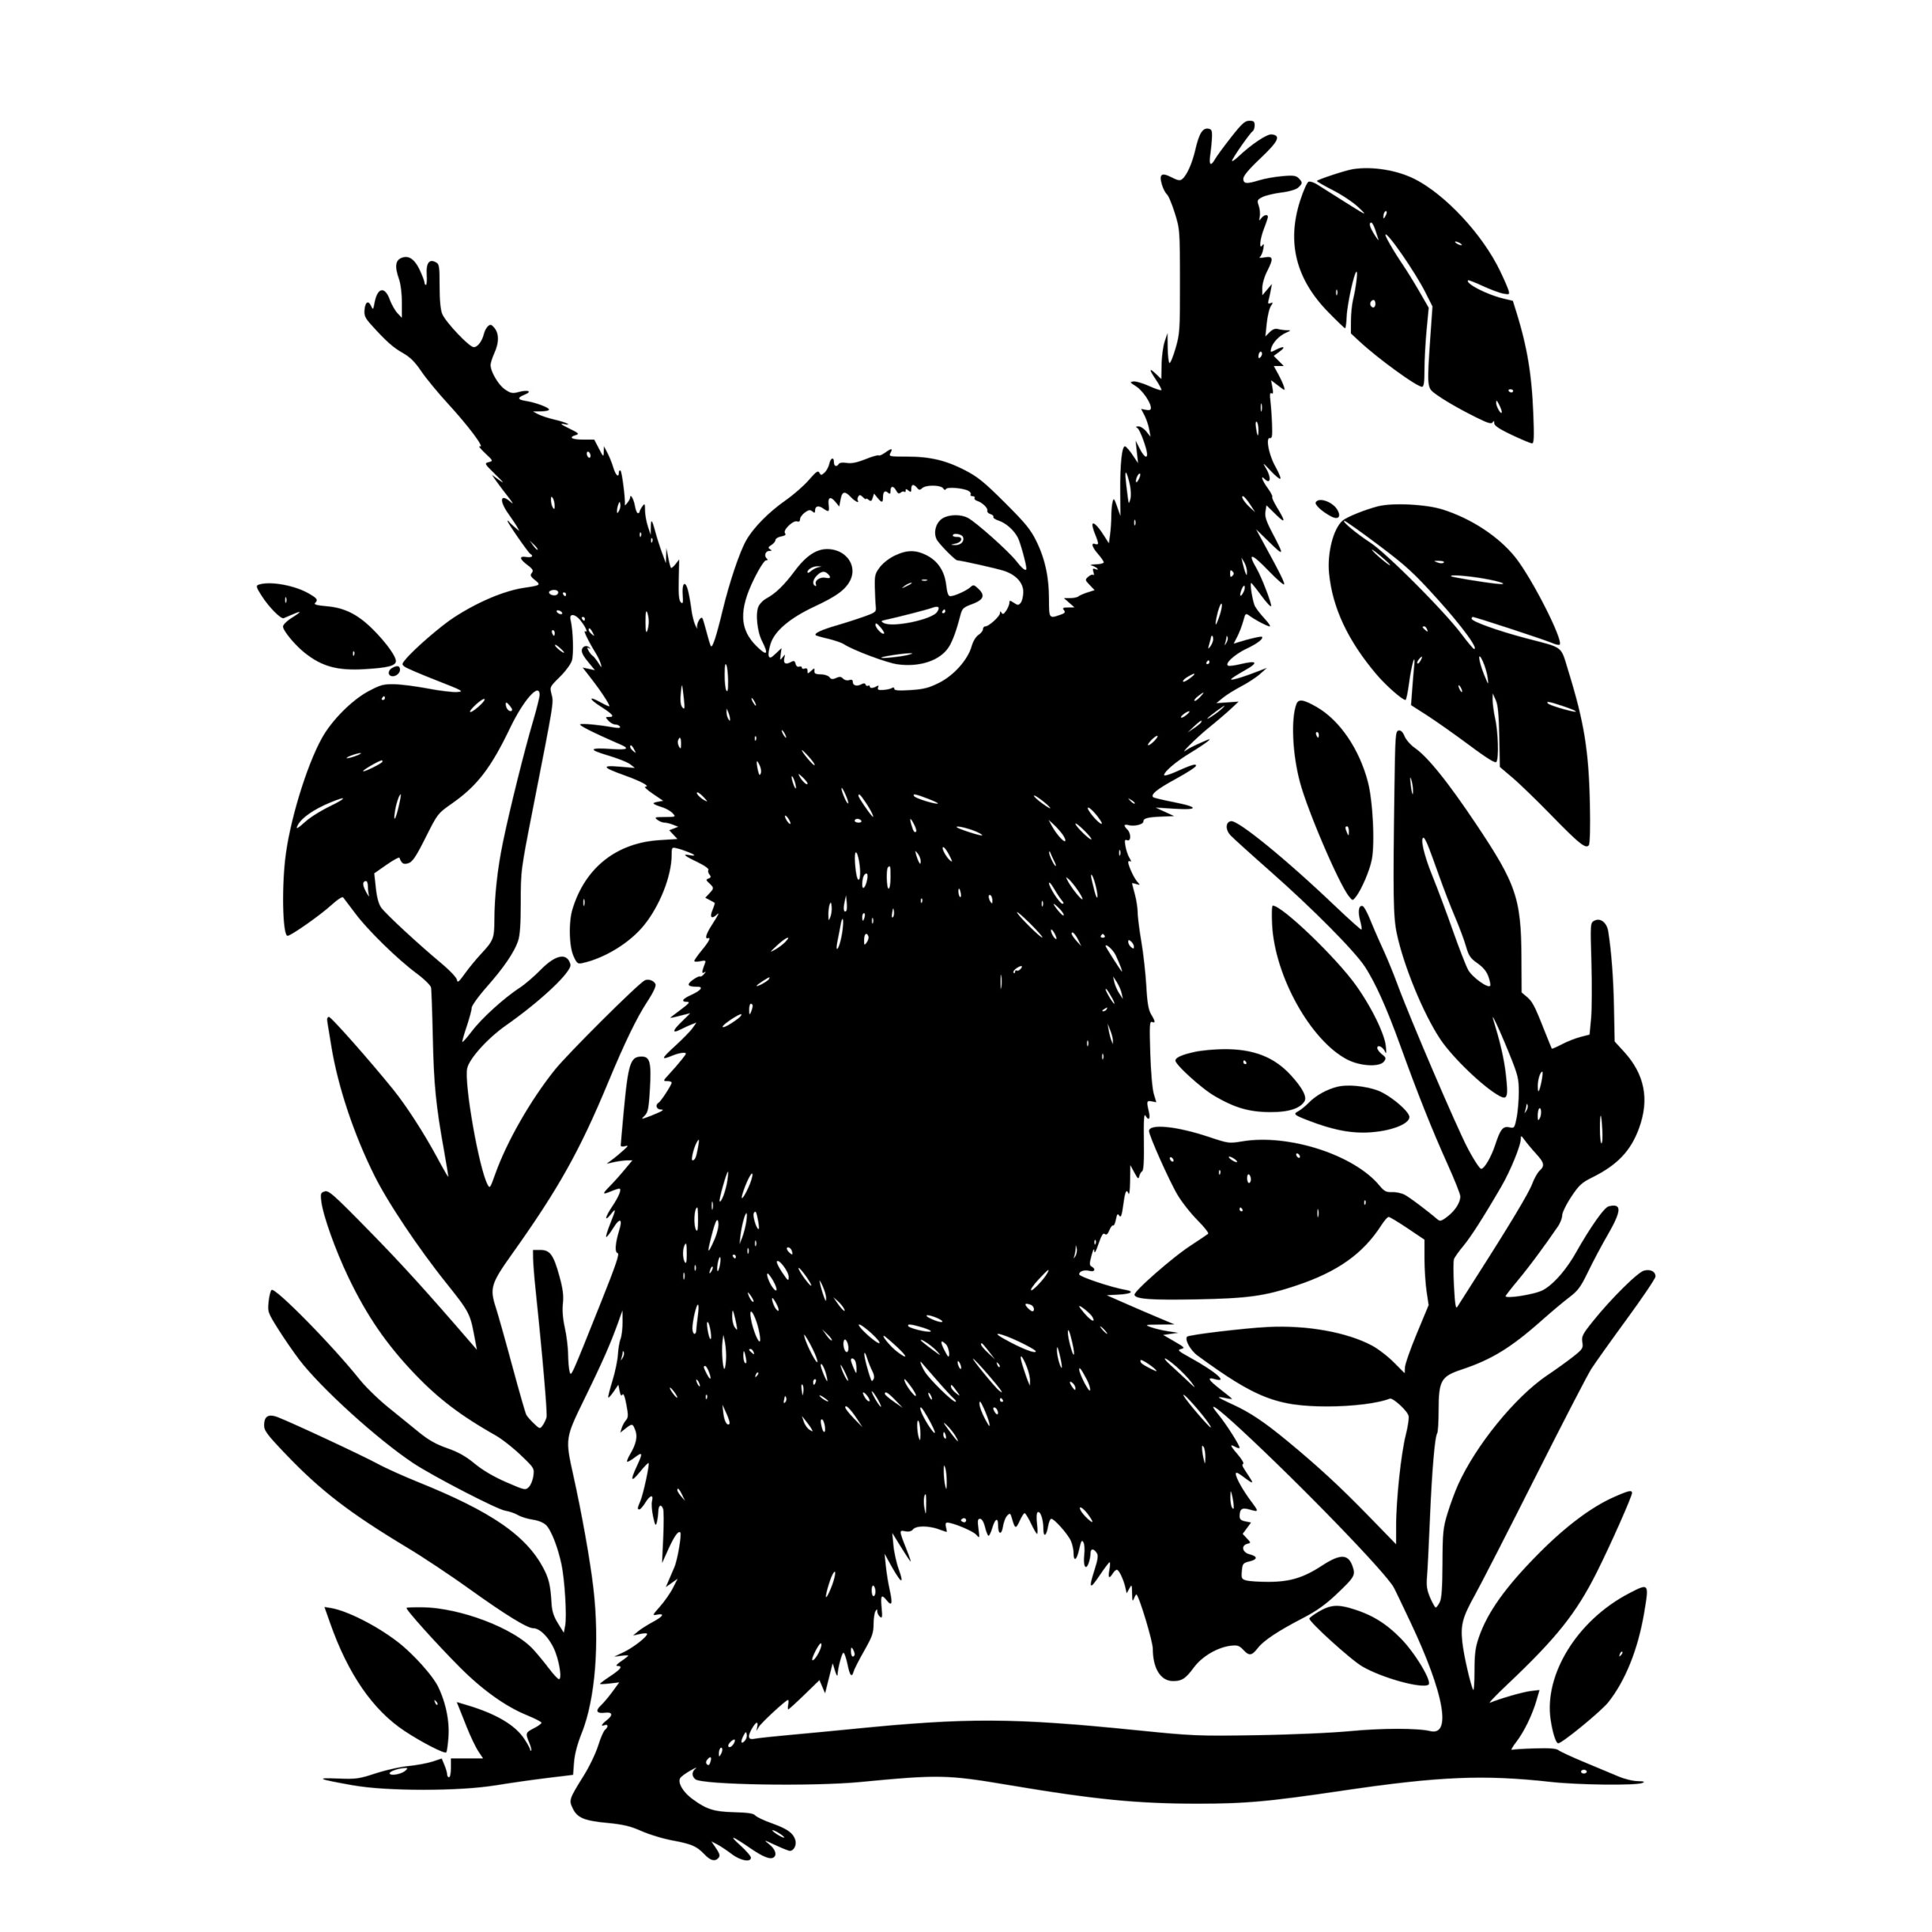 Joyful Sloth SVG Image for Cricut, Silhouette, Laser Machines | Instant ...